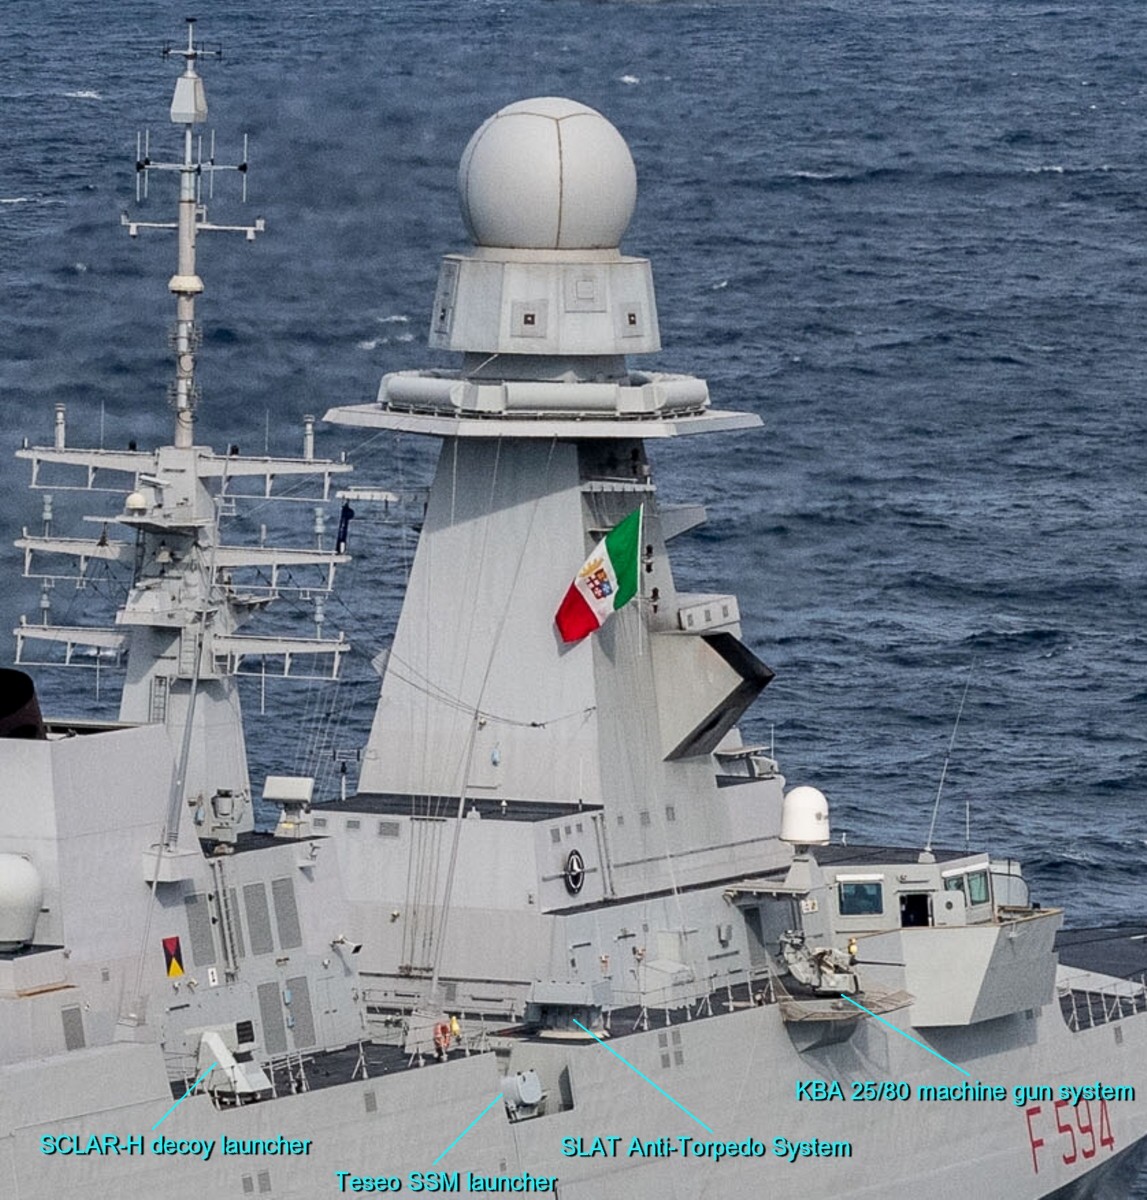 bergamini fremm class guided missile frigate ffgh italian navy marina militare kba 25/80 machine gun system sclar-h decoy slat anti-torpedo teseo ssm 06w